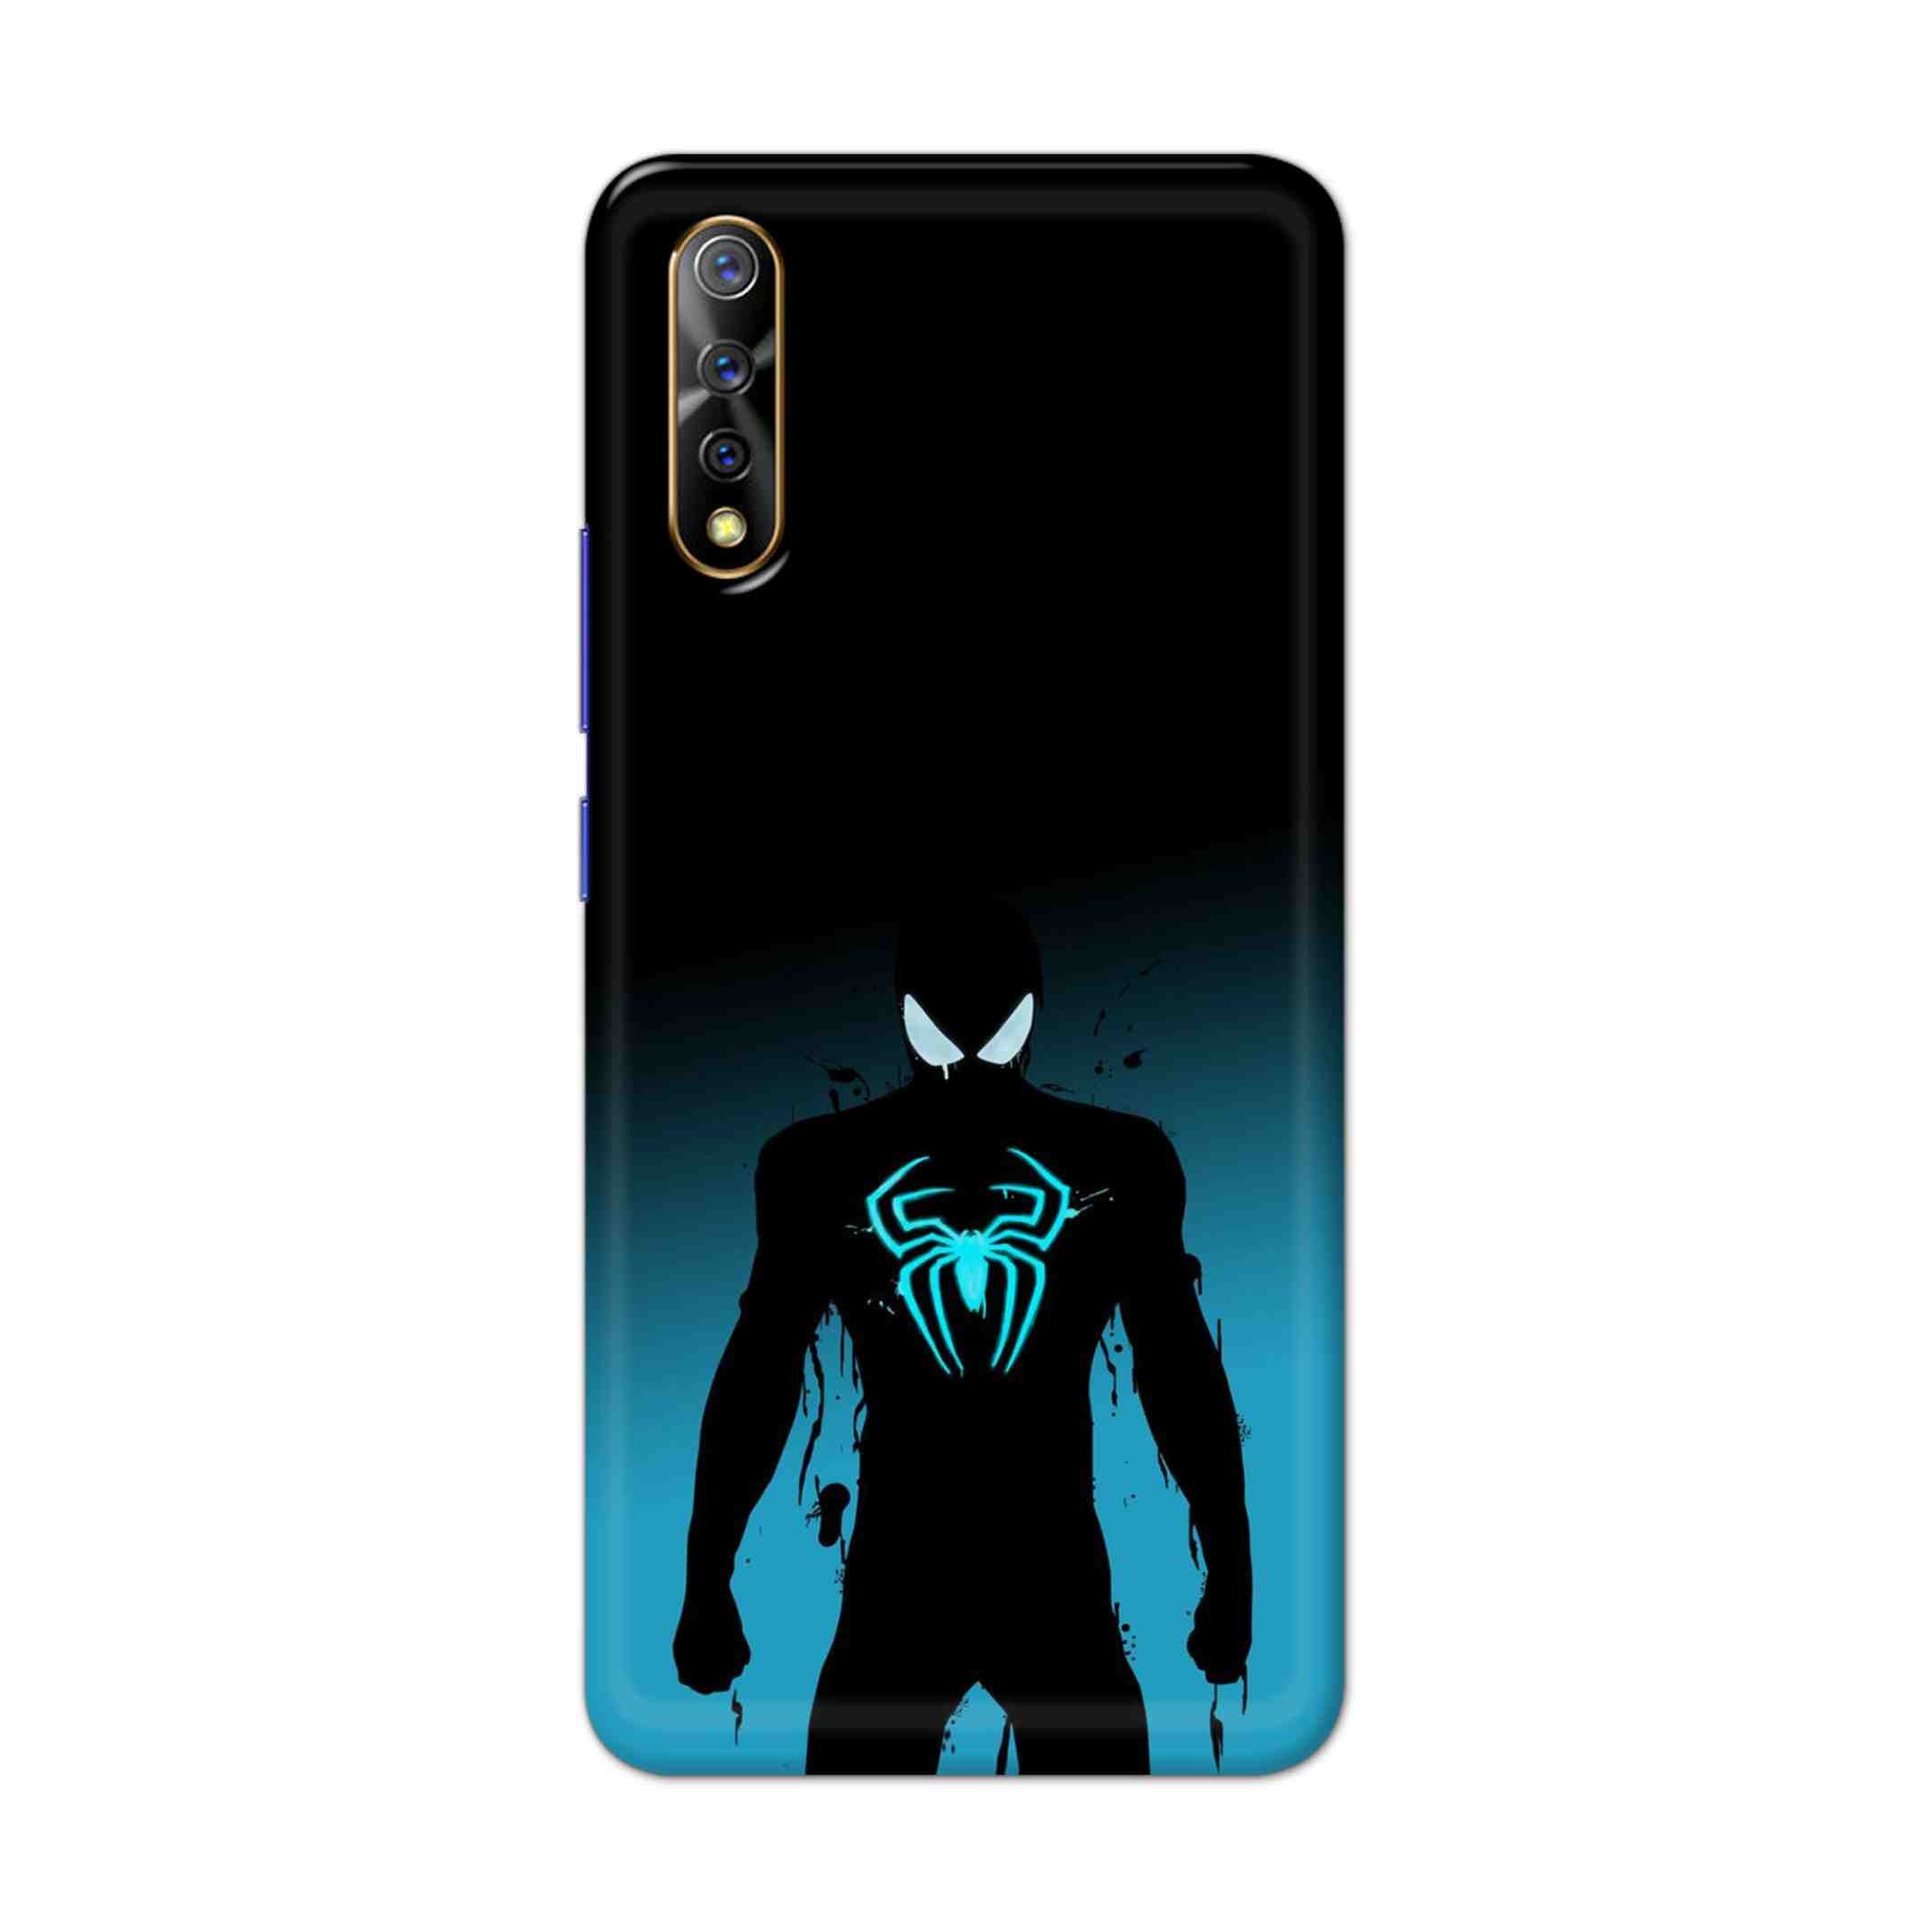 Buy Neon Spiderman Hard Back Mobile Phone Case Cover For Vivo S1 / Z1x Online